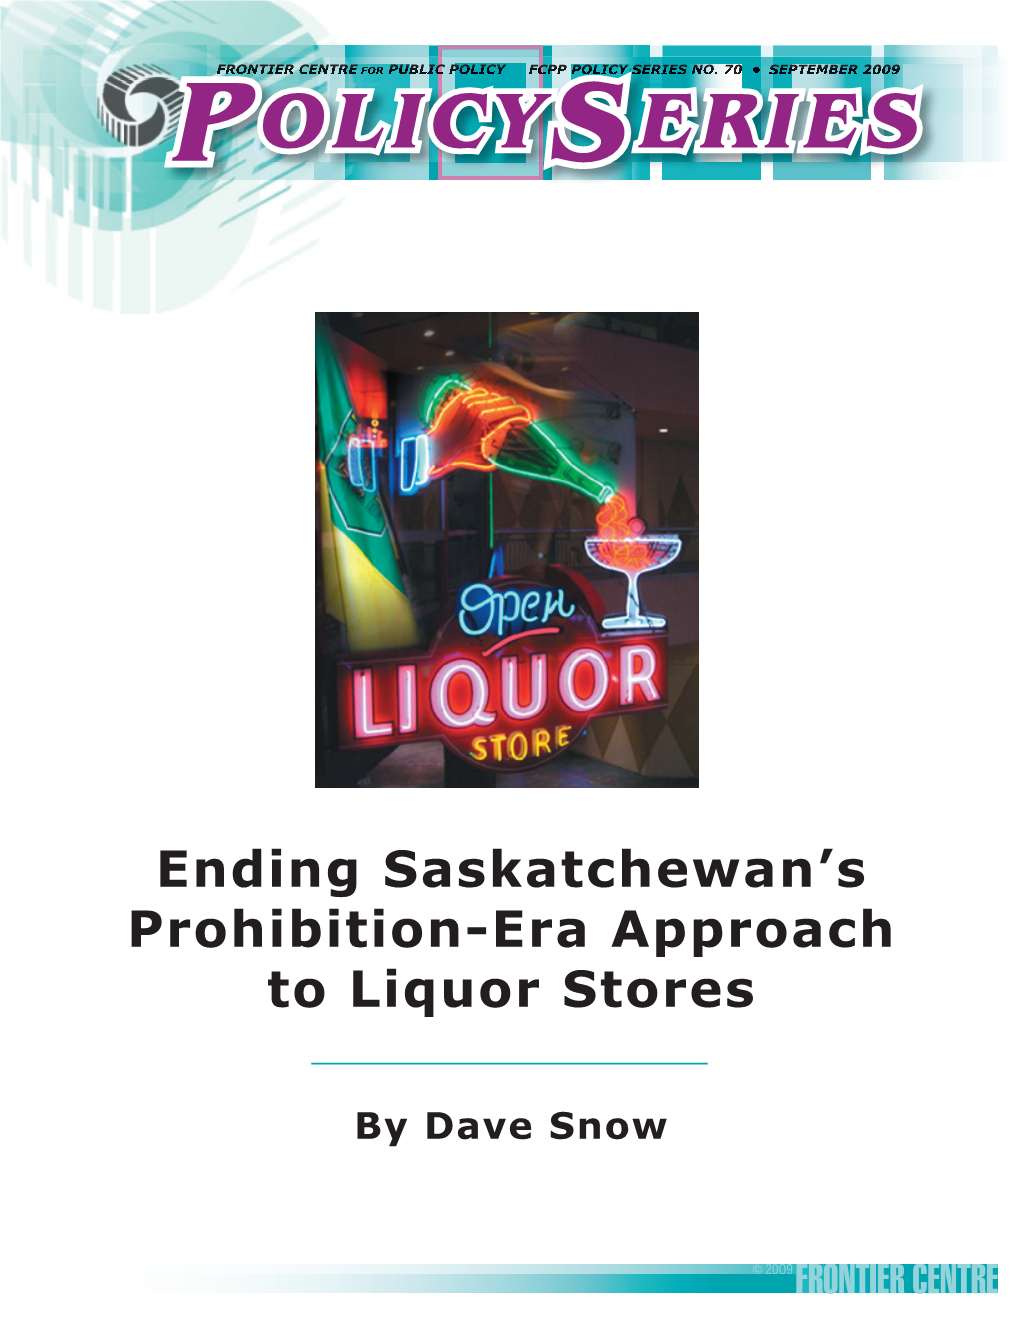 Saskatchewan’S Prohibition-Era Approach to Liquor Stores